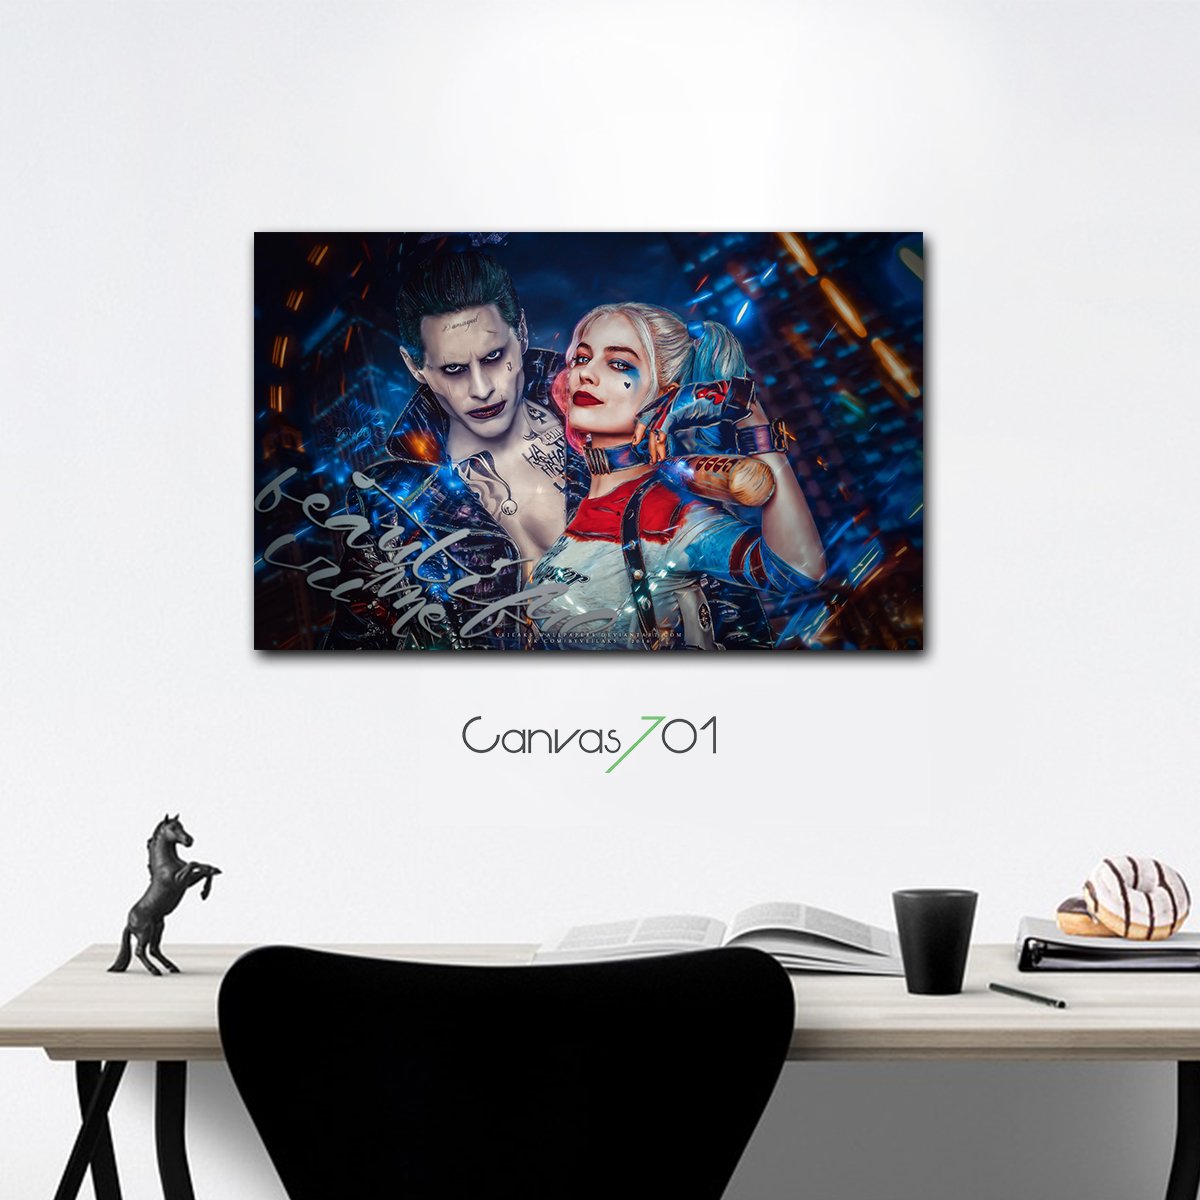 Canvas701 | Joker Ve Harley Kanvas Tablo